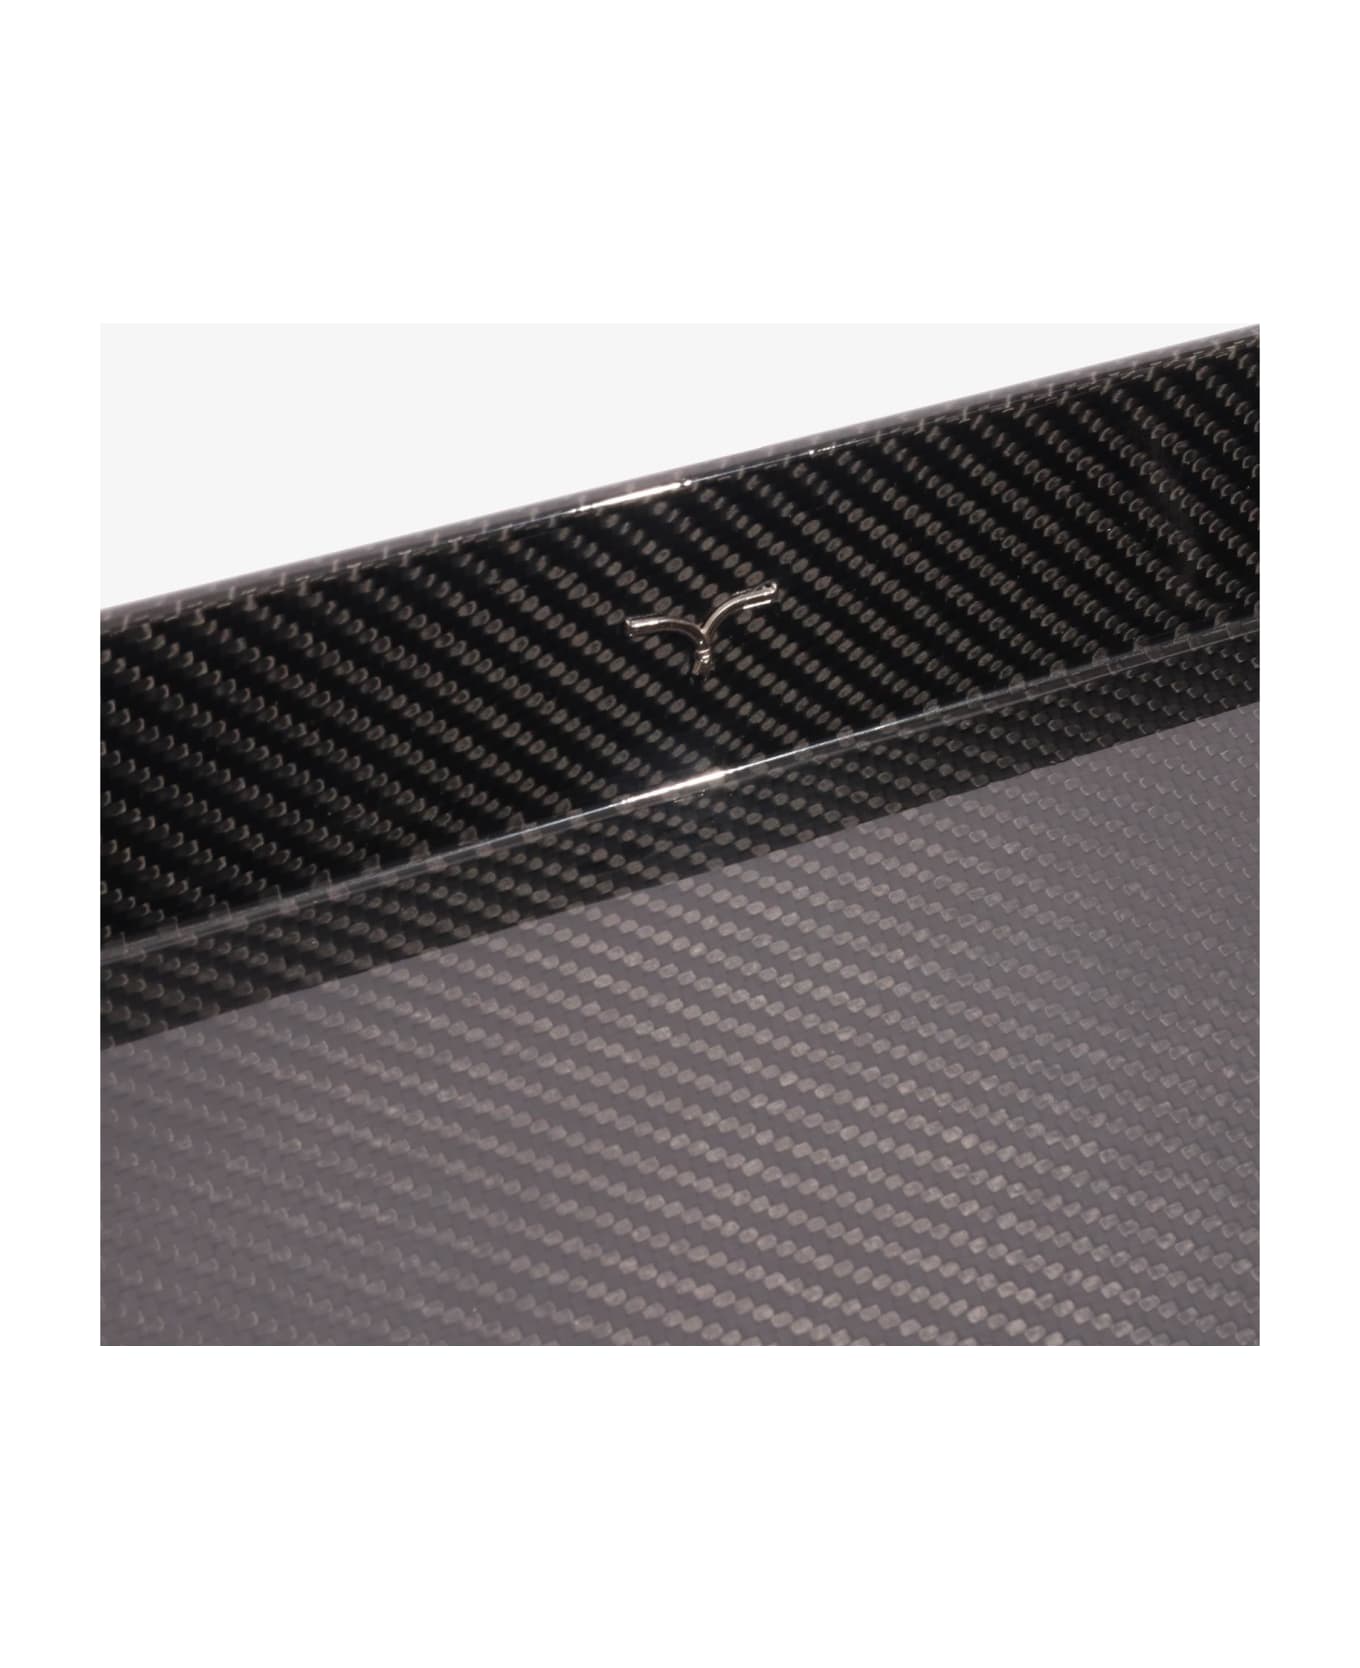 Larusmiani Rectangular Carbon Fiber Tray Tray - Neutral トレー